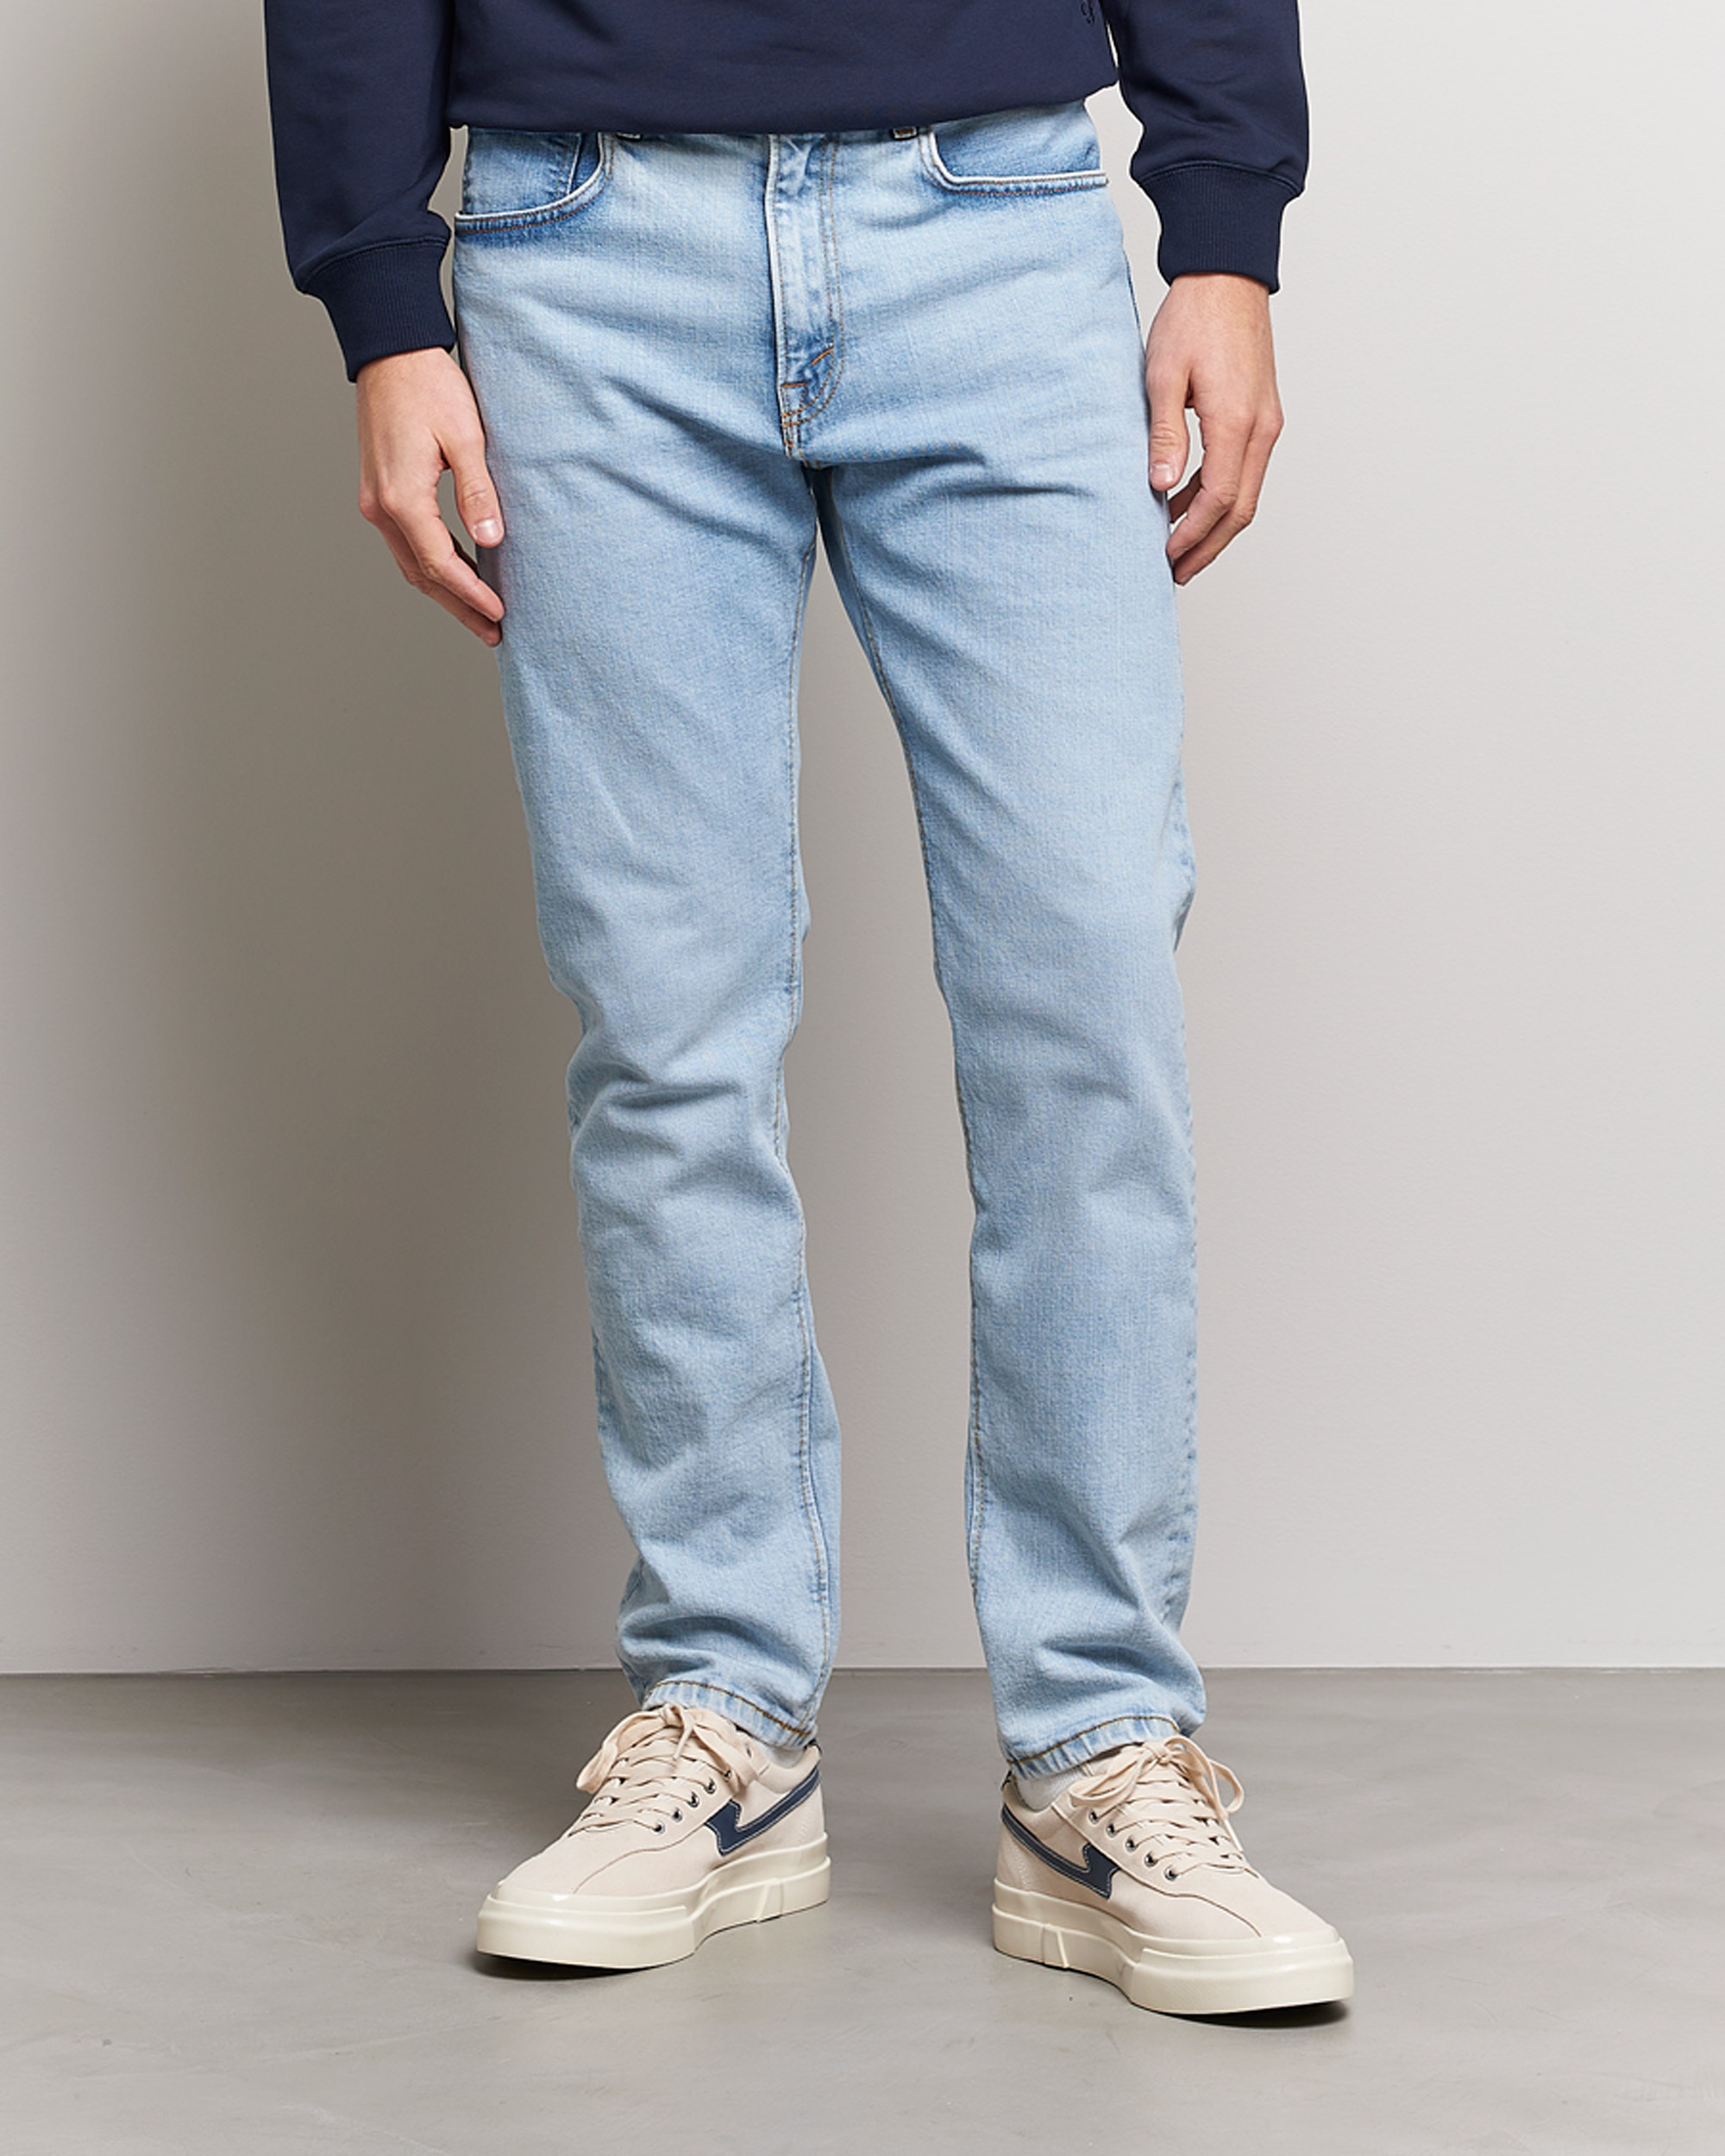 Men | Blue jeans | Jeanerica | TM005 Tapered Jeans Moda Blue